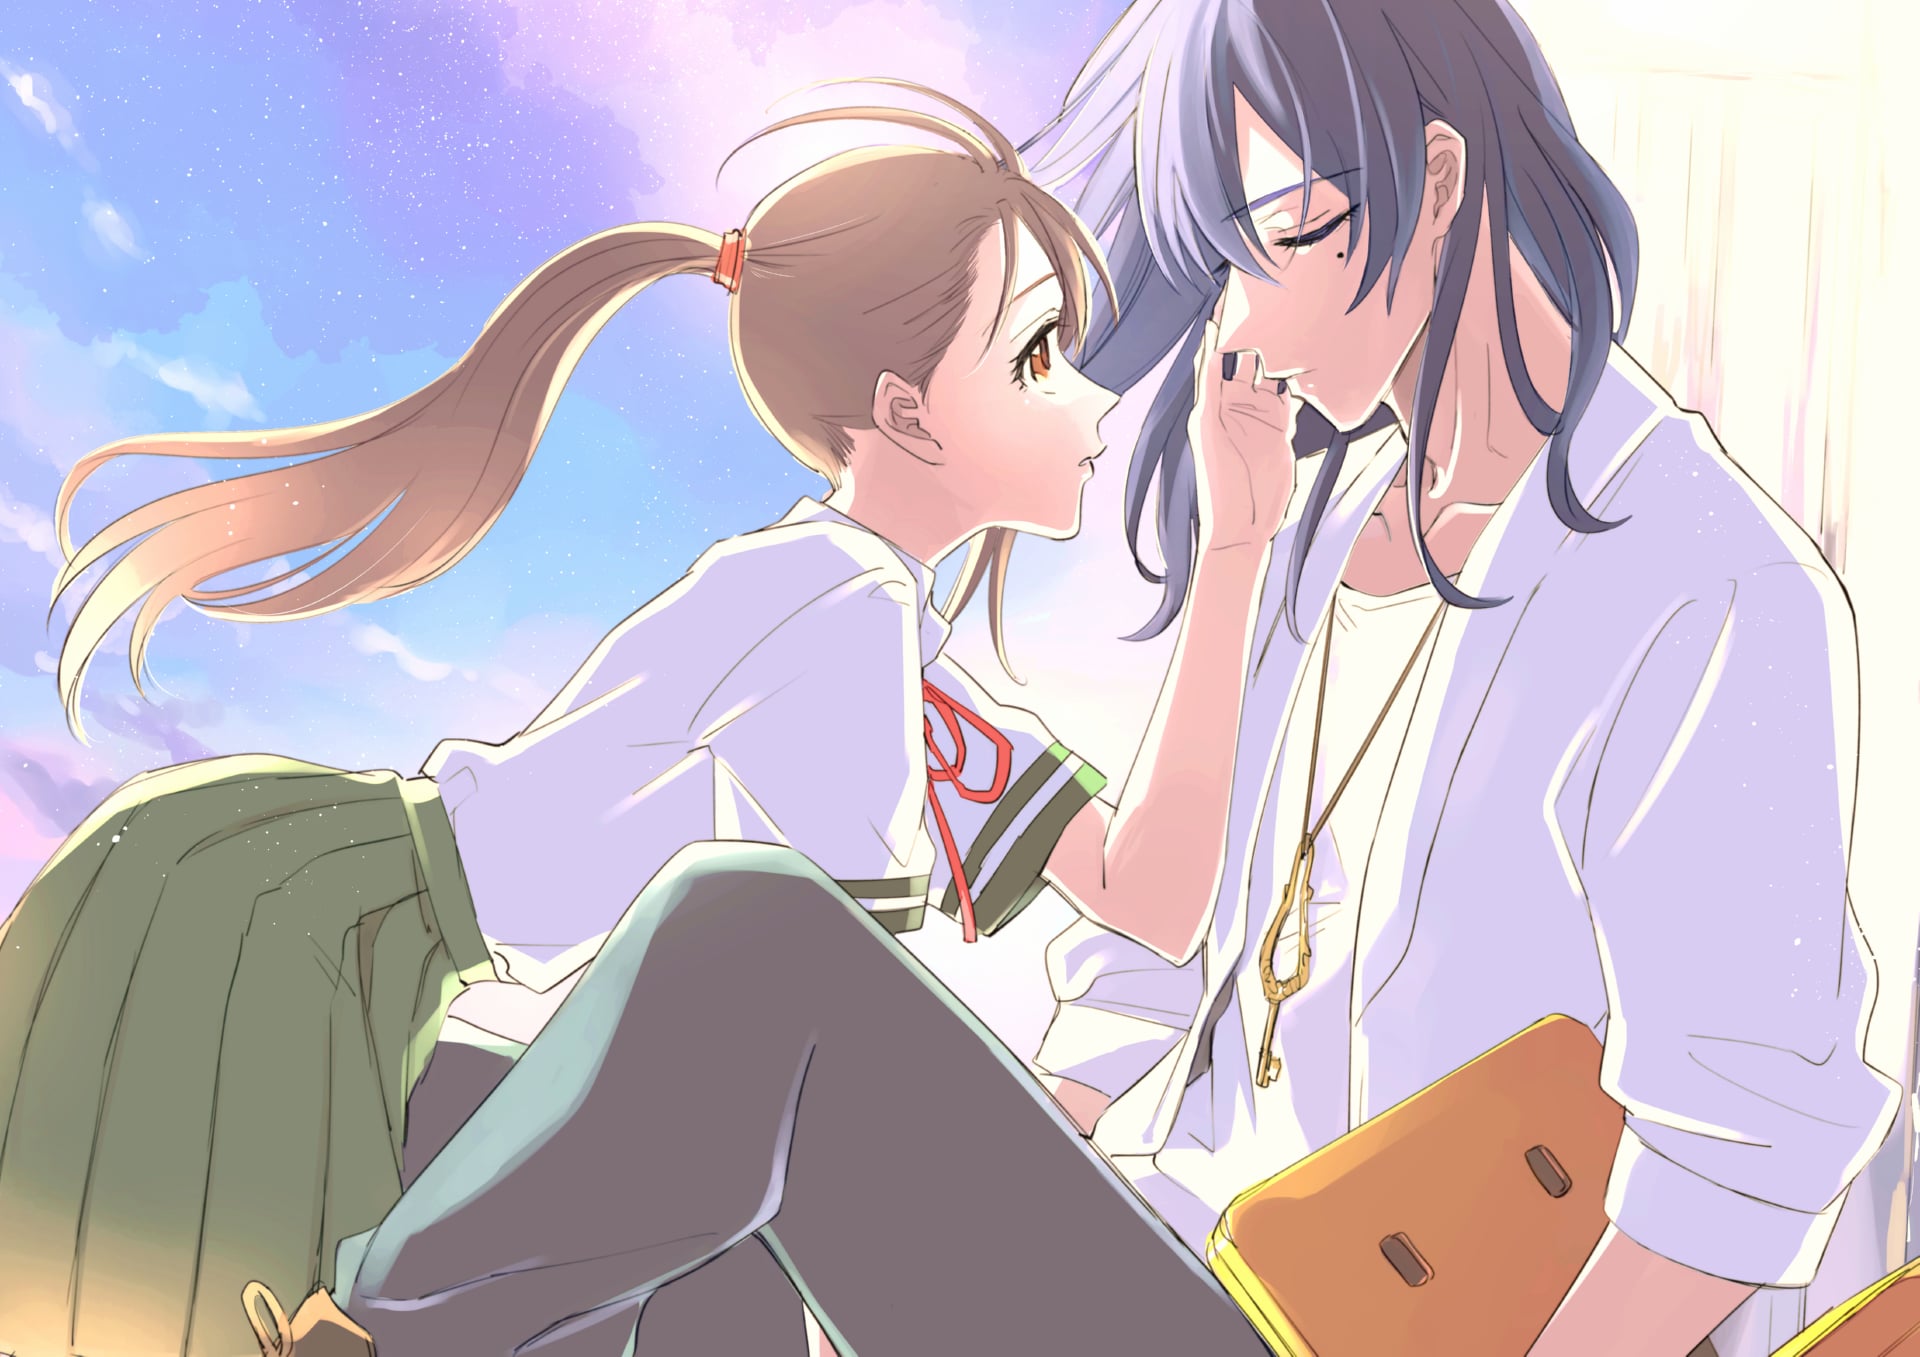 Anime Suzume no Tojimari 320 x 480 iPhone wallpaper download